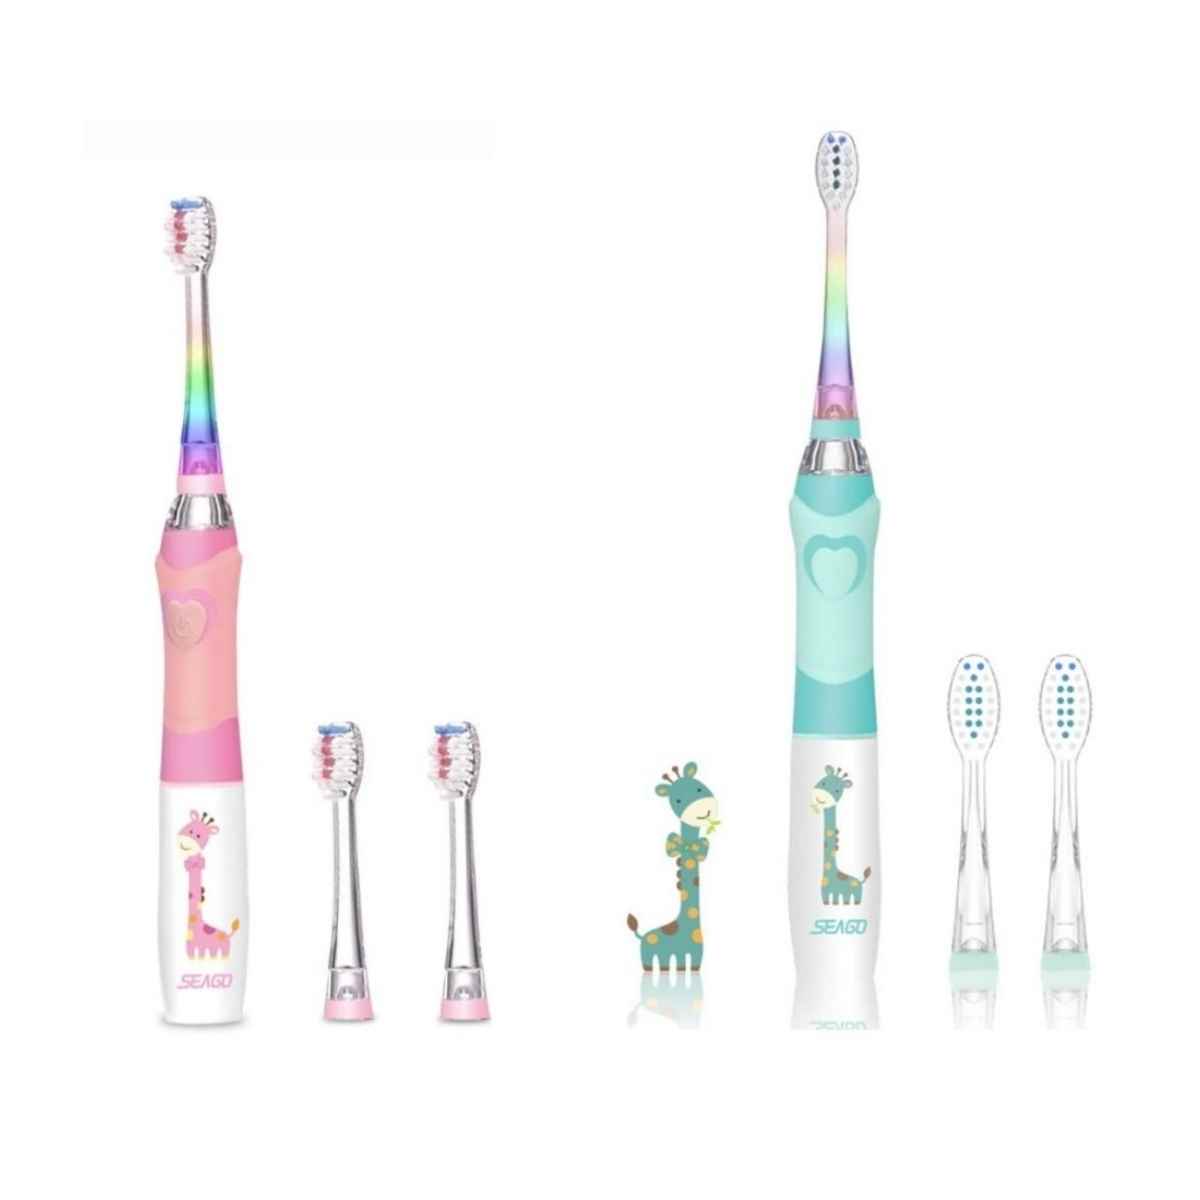 Seago kids electric toothbrush